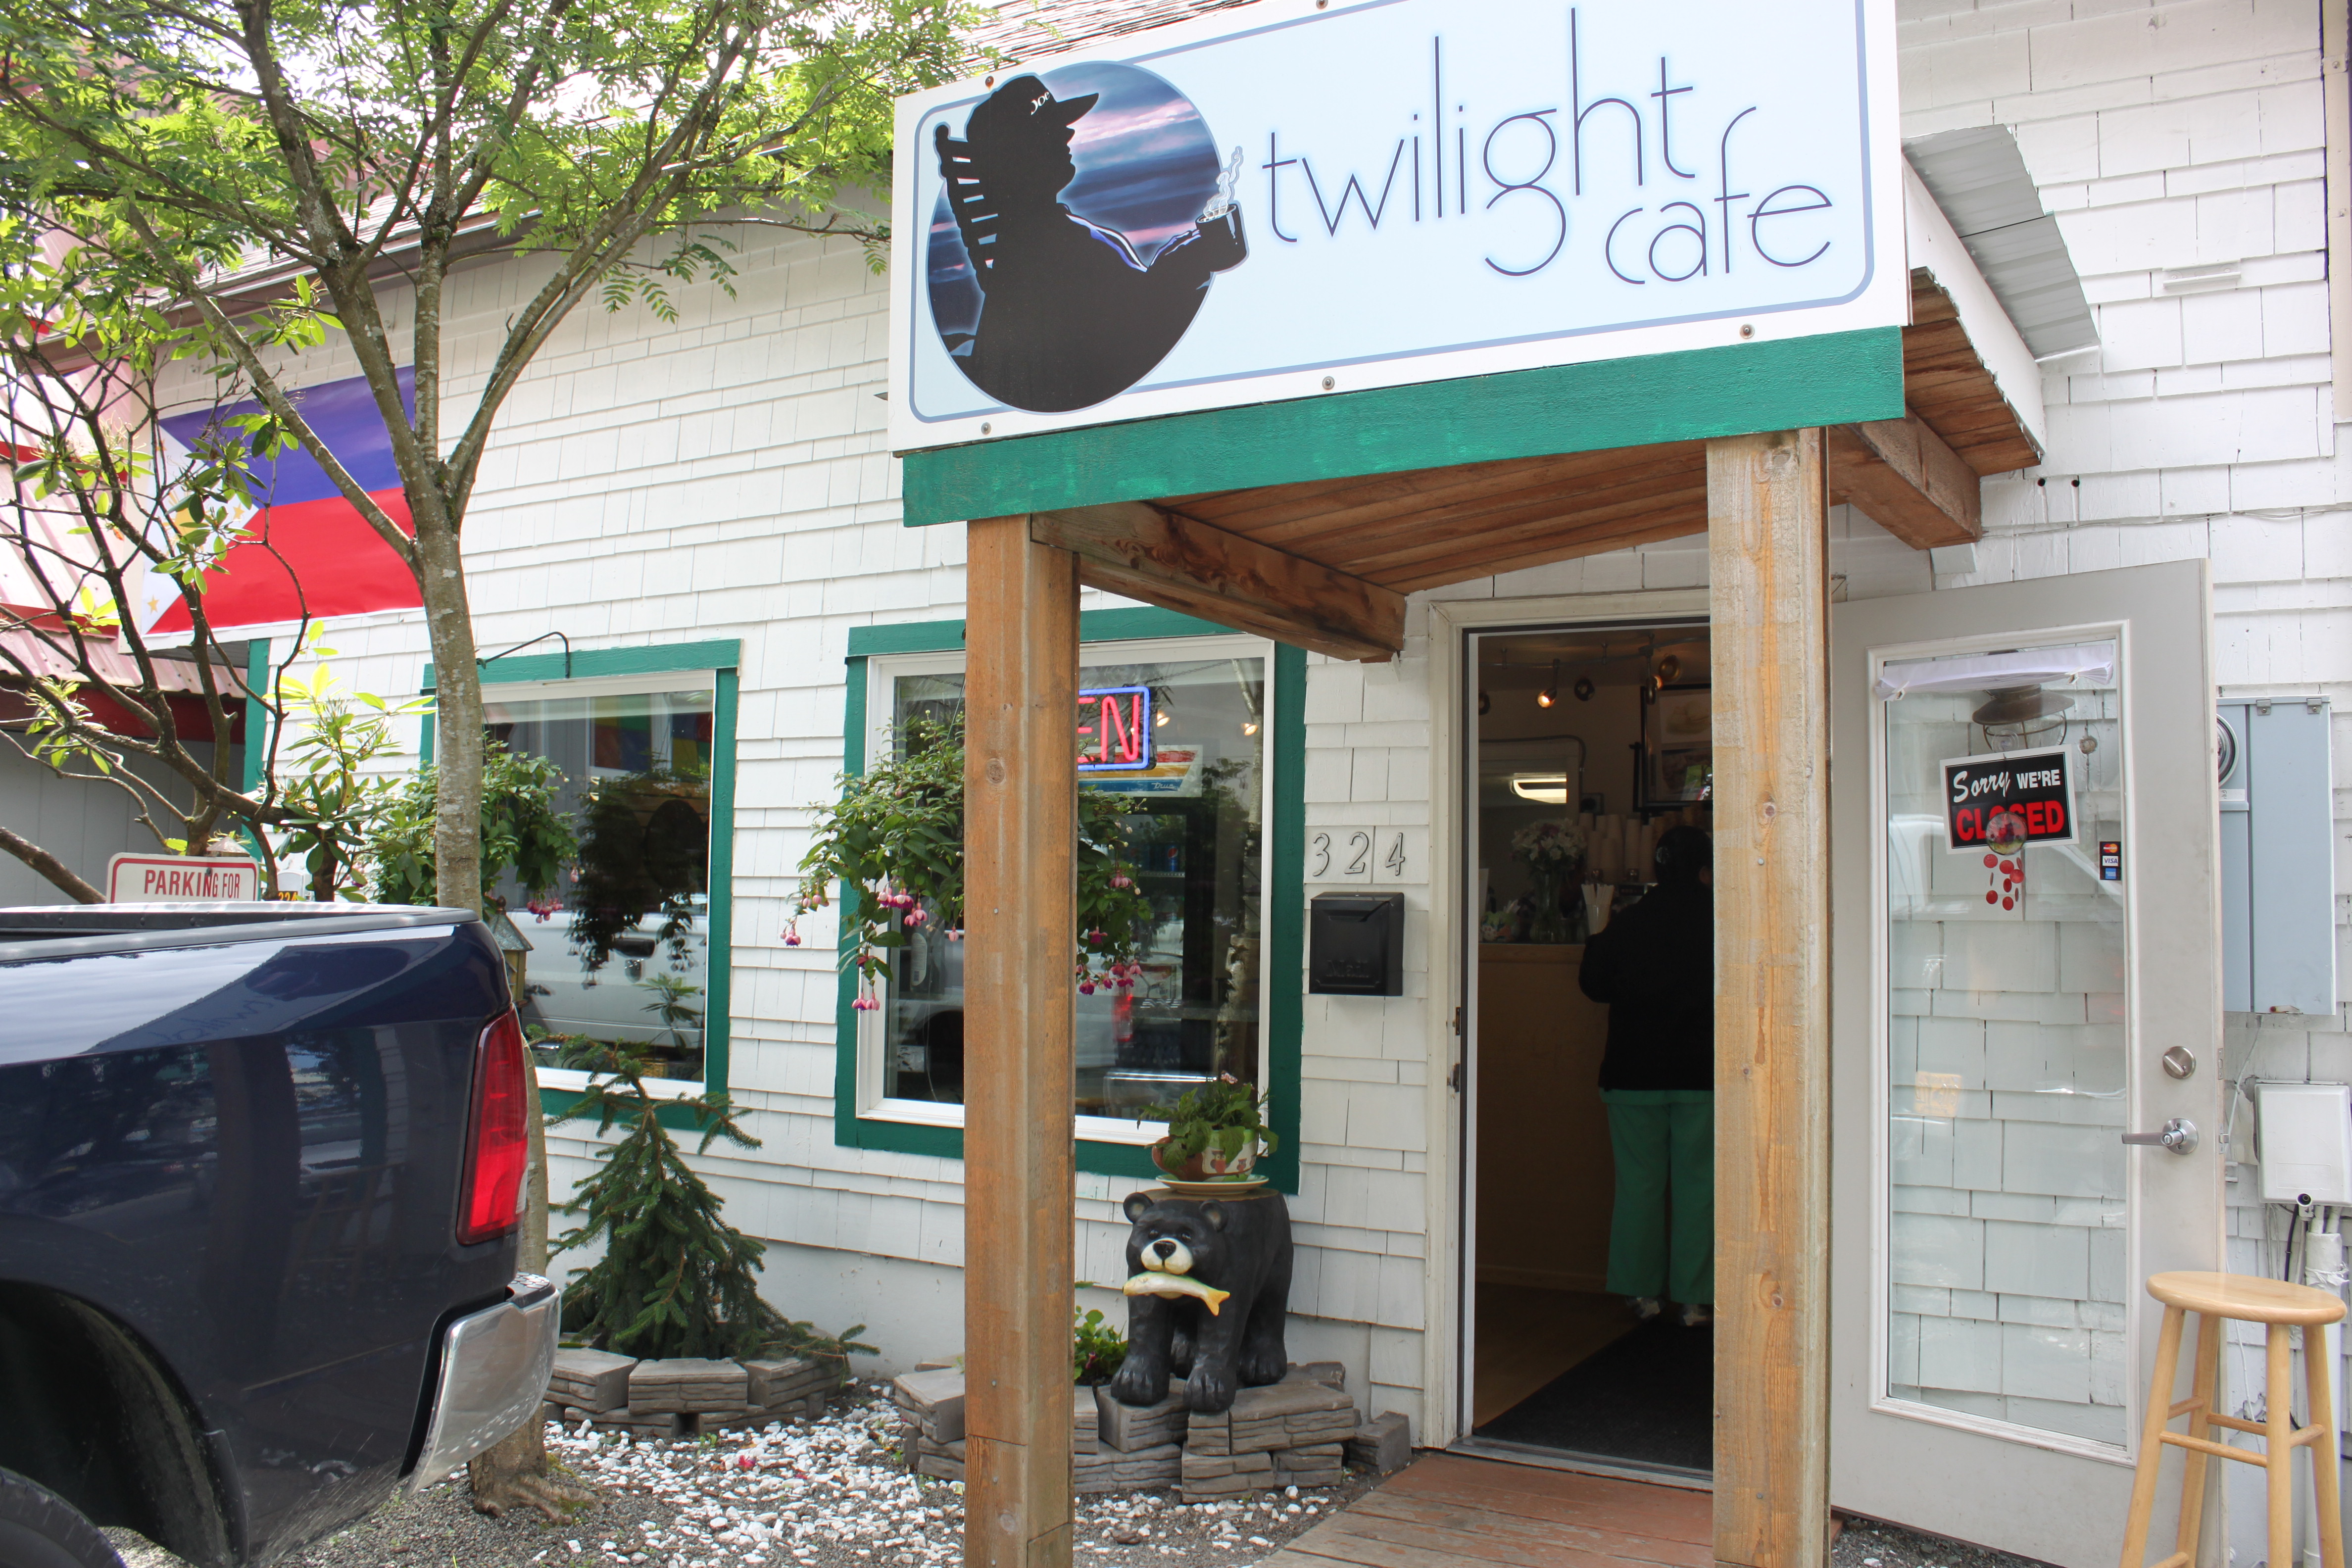 Twilight Cafe won last year after adding decorative plants. (Photo by Lisa Phu/KTOO)